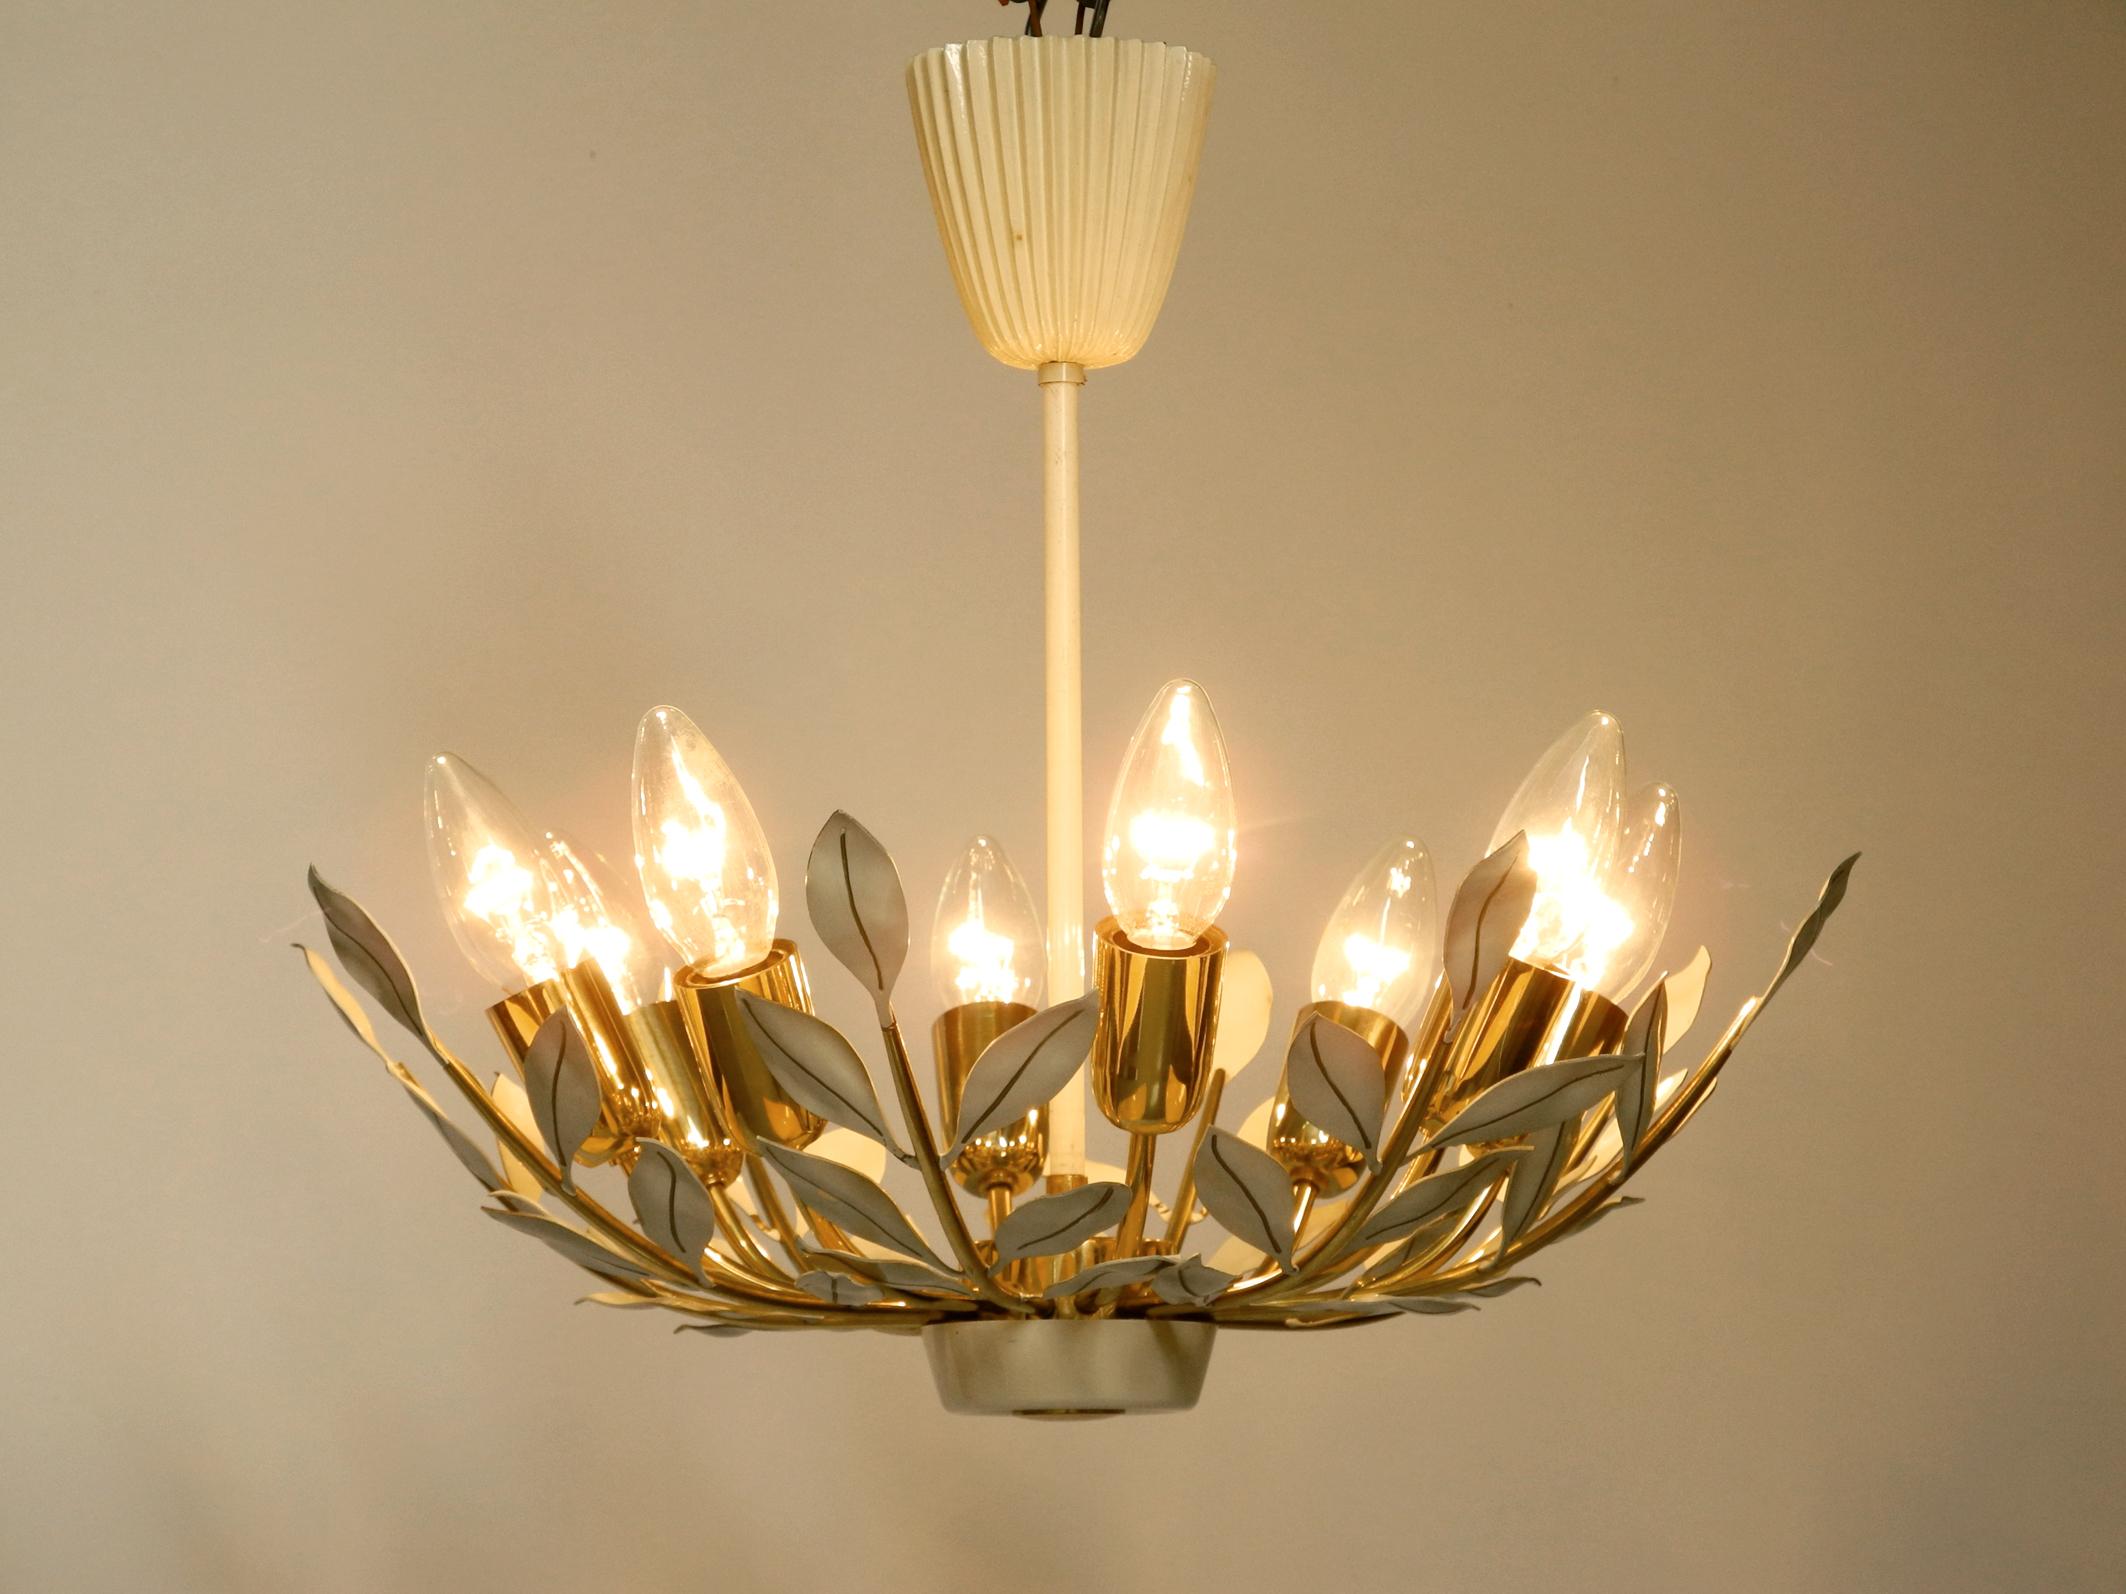 German Small 1950s brass Sputnik ceiling lamp with 8 arms by Vereinigte Werkstätten For Sale